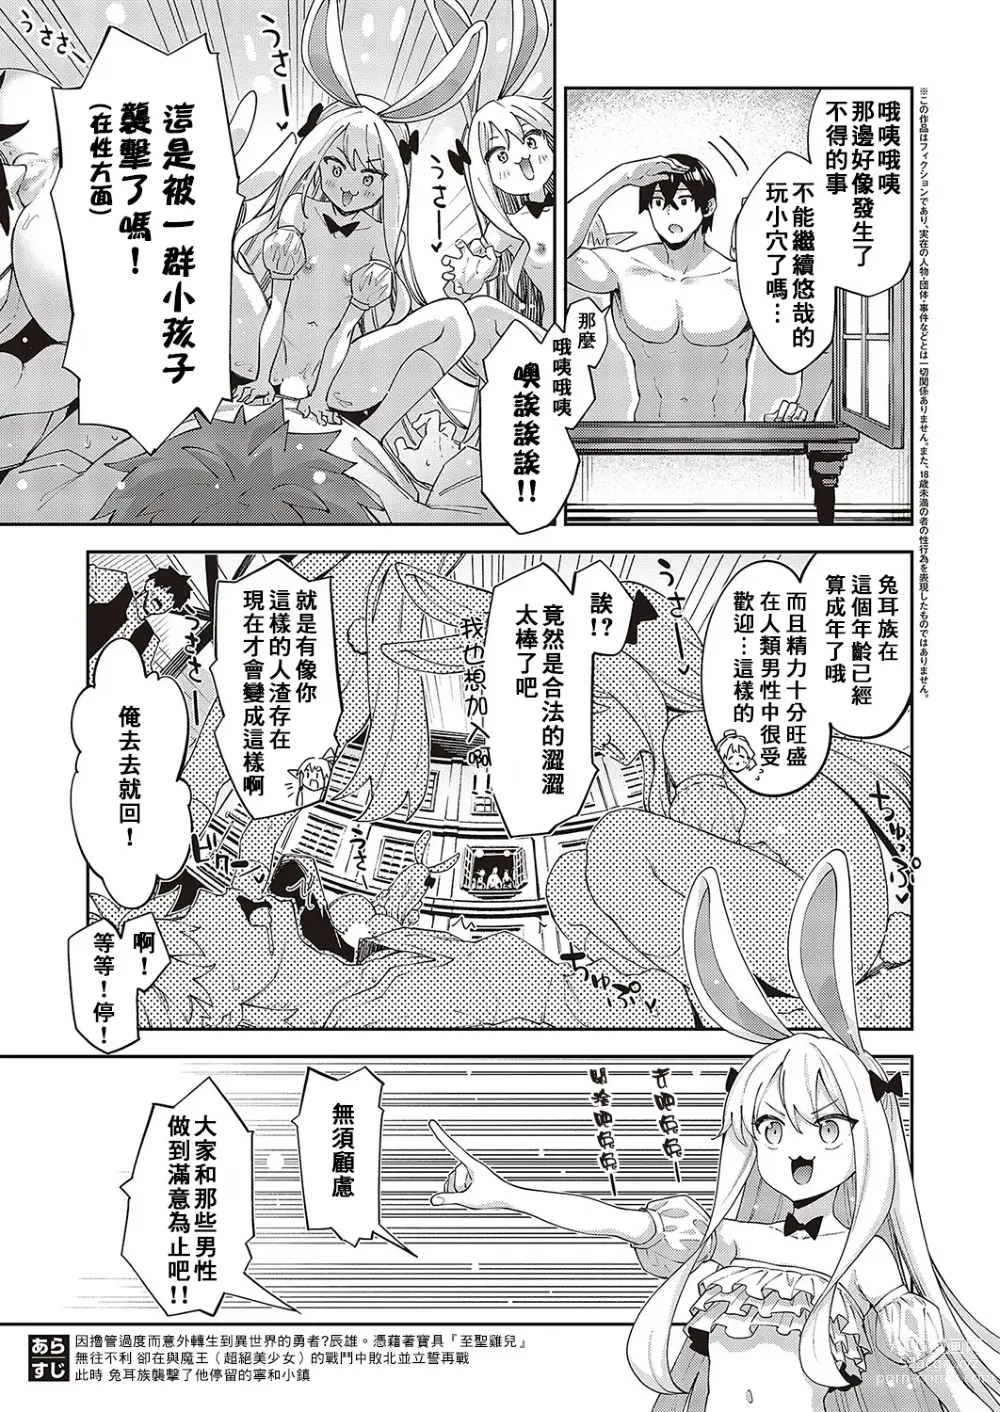 Page 4 of manga 既然來到異世界就用好色技能盡其所能的謳歌人生 第10枪